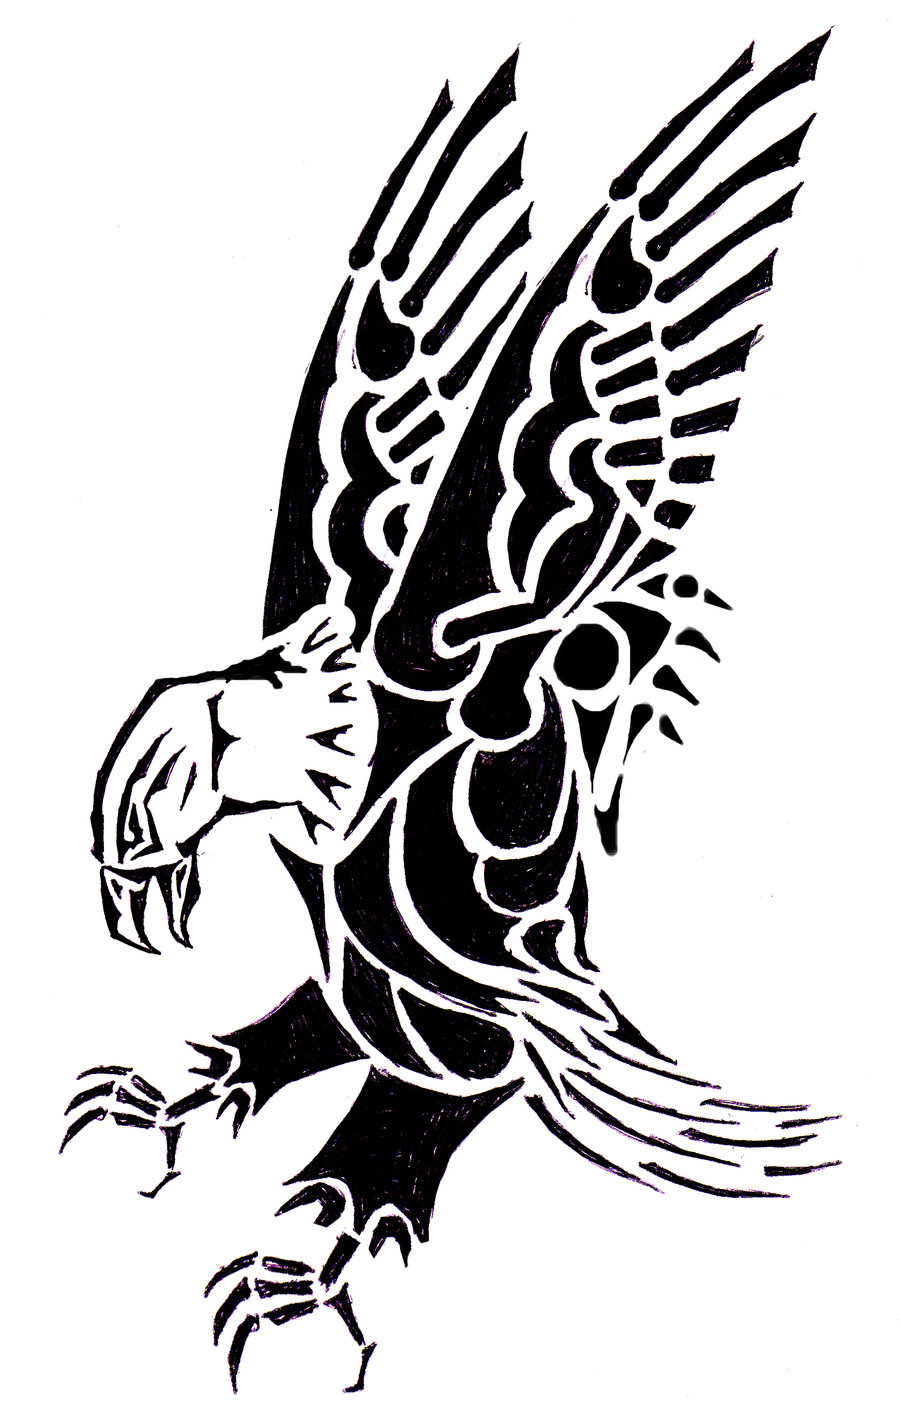 Tribal Eagle Tattoos - Designs and Ideas